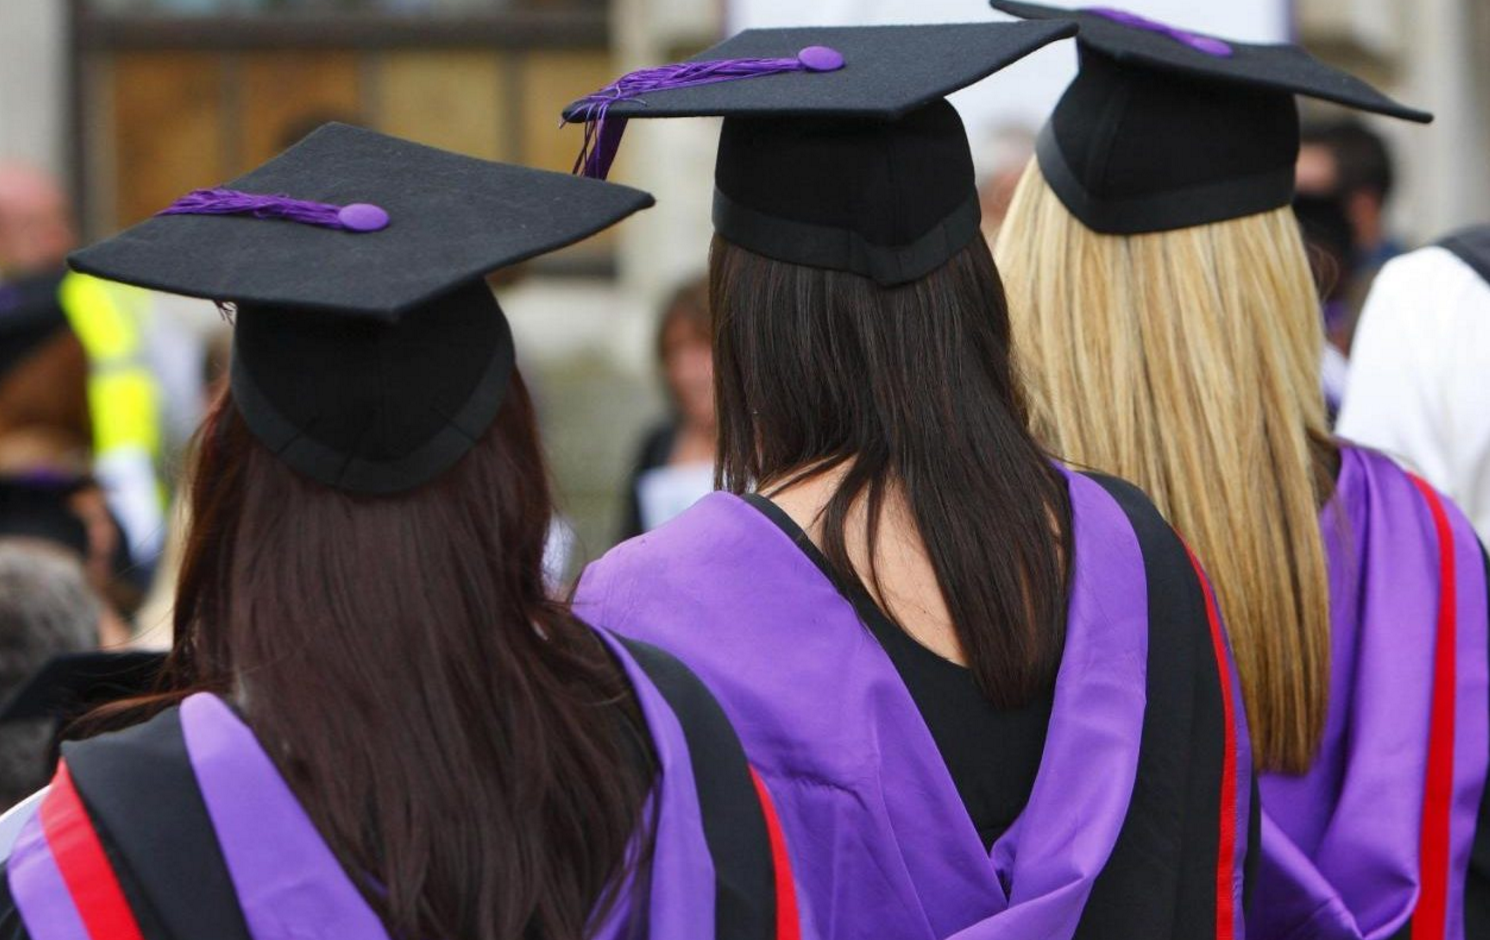 Job prospects for Australian university graduates are declining